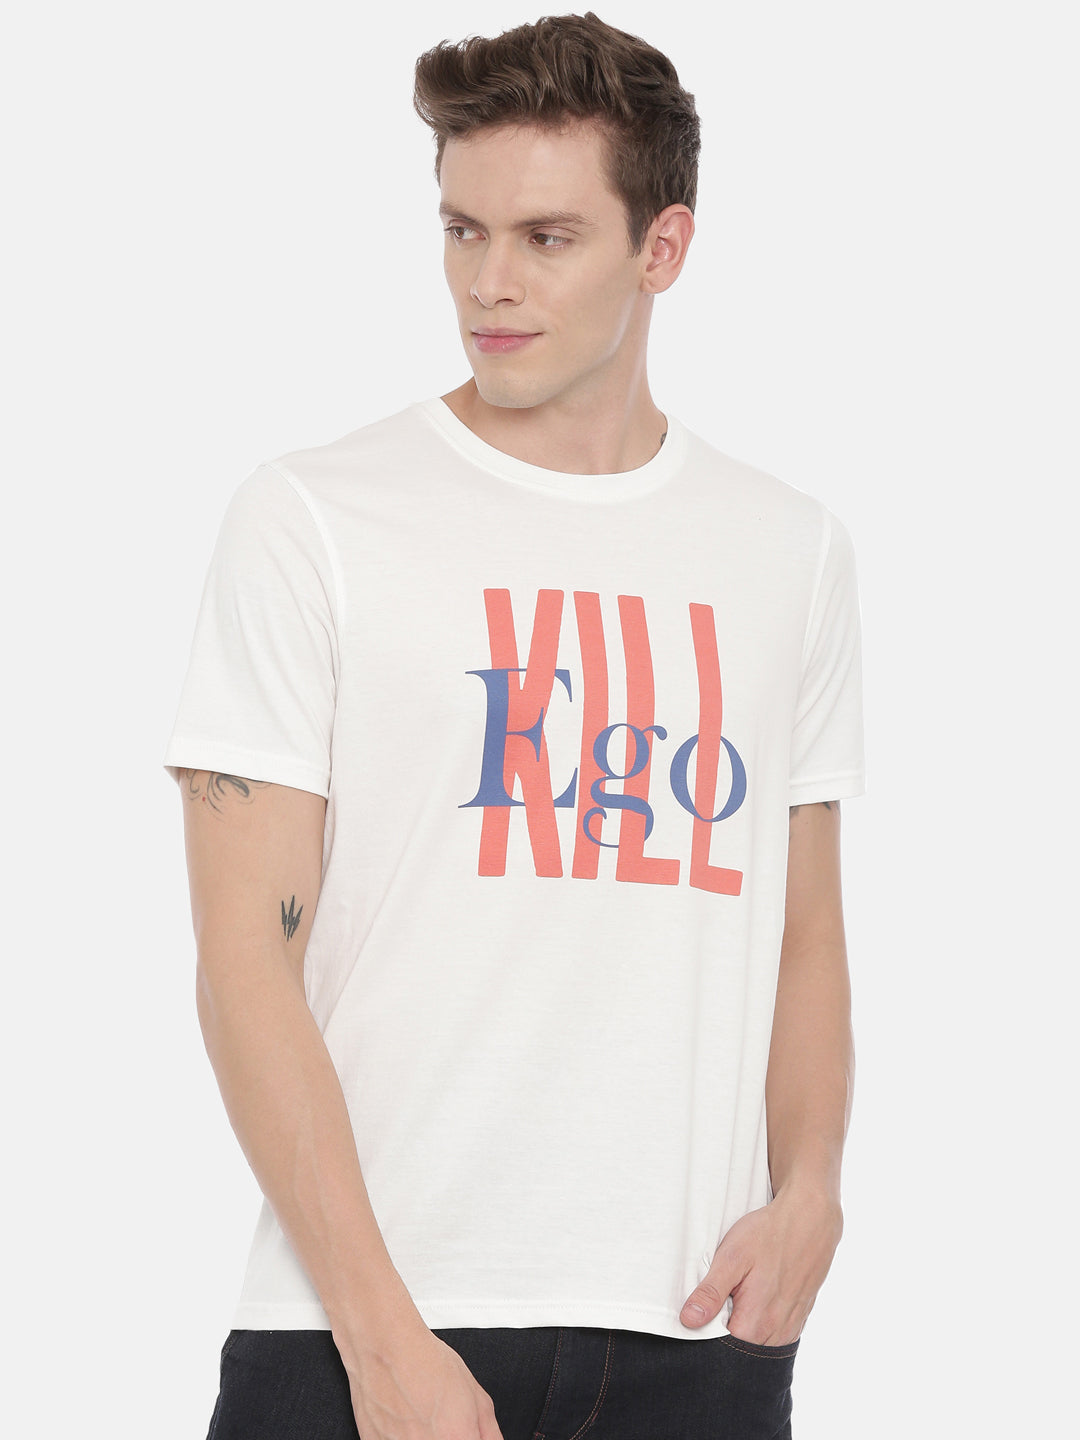 Kill Ego T-Shirt Graphic T-Shirts Bushirt   